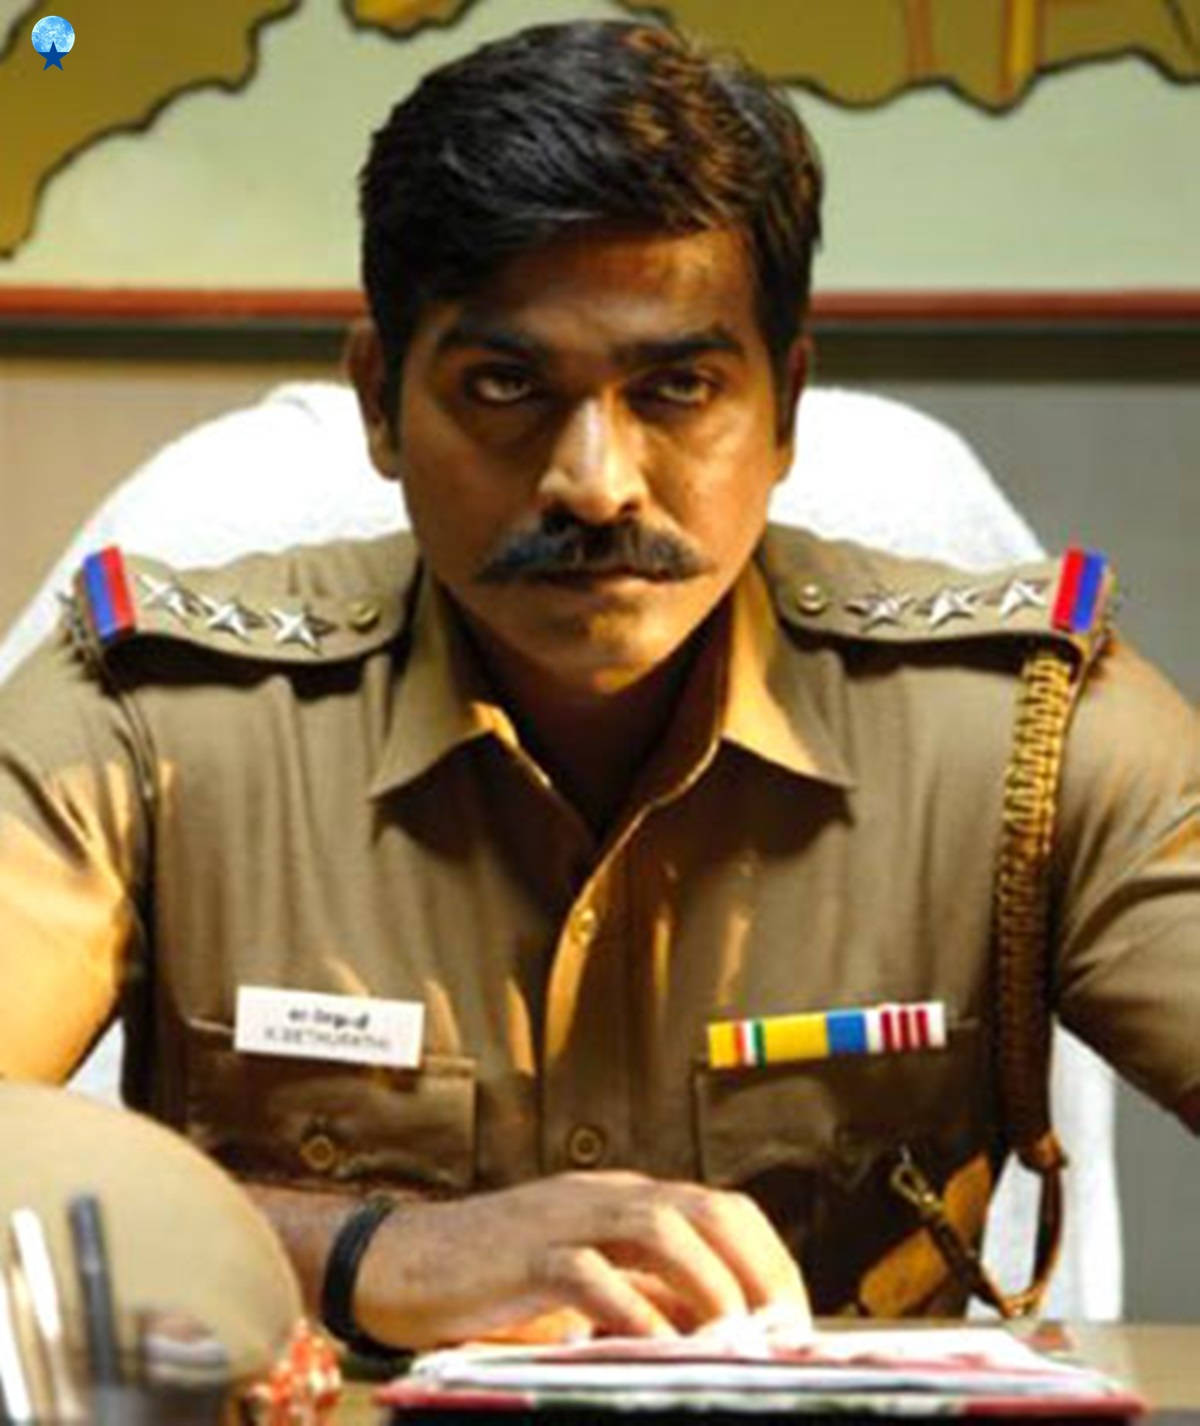 Vijaysethupathi Usando El Uniforme De La Policía Sethupathi. Fondo de pantalla